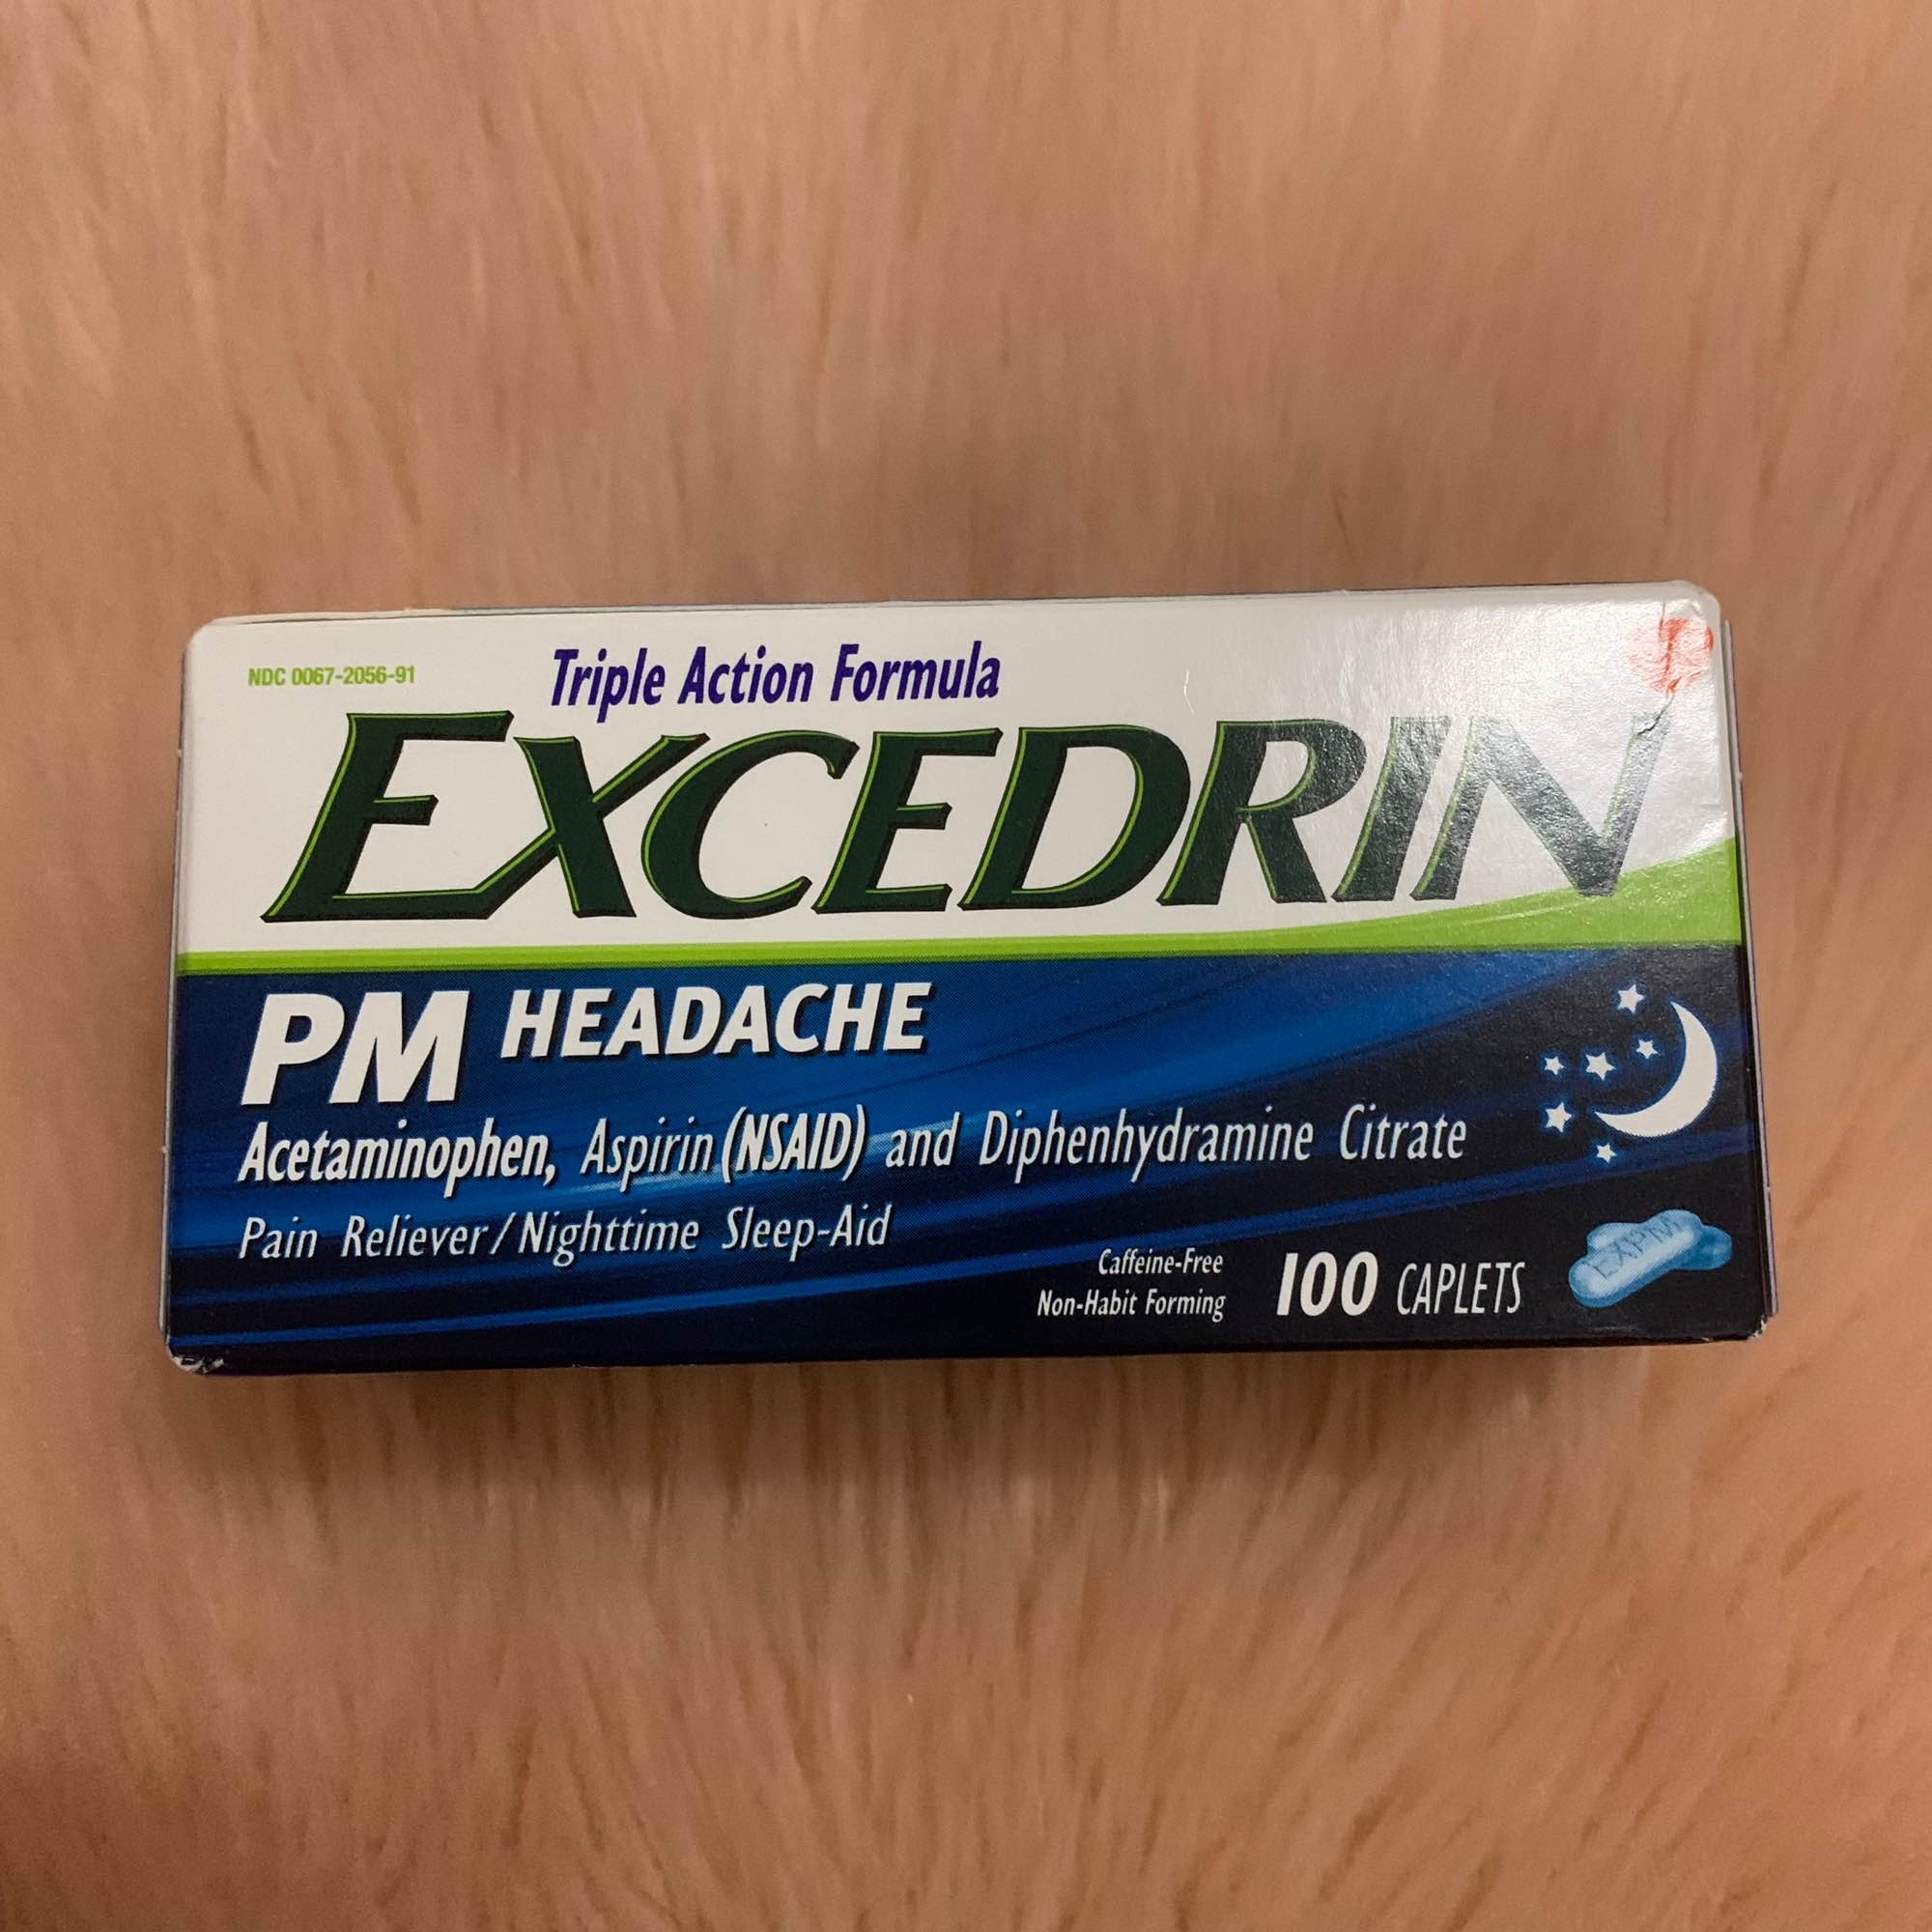 Excedrin PM Headache Pain Reliever Caplet - 100 count